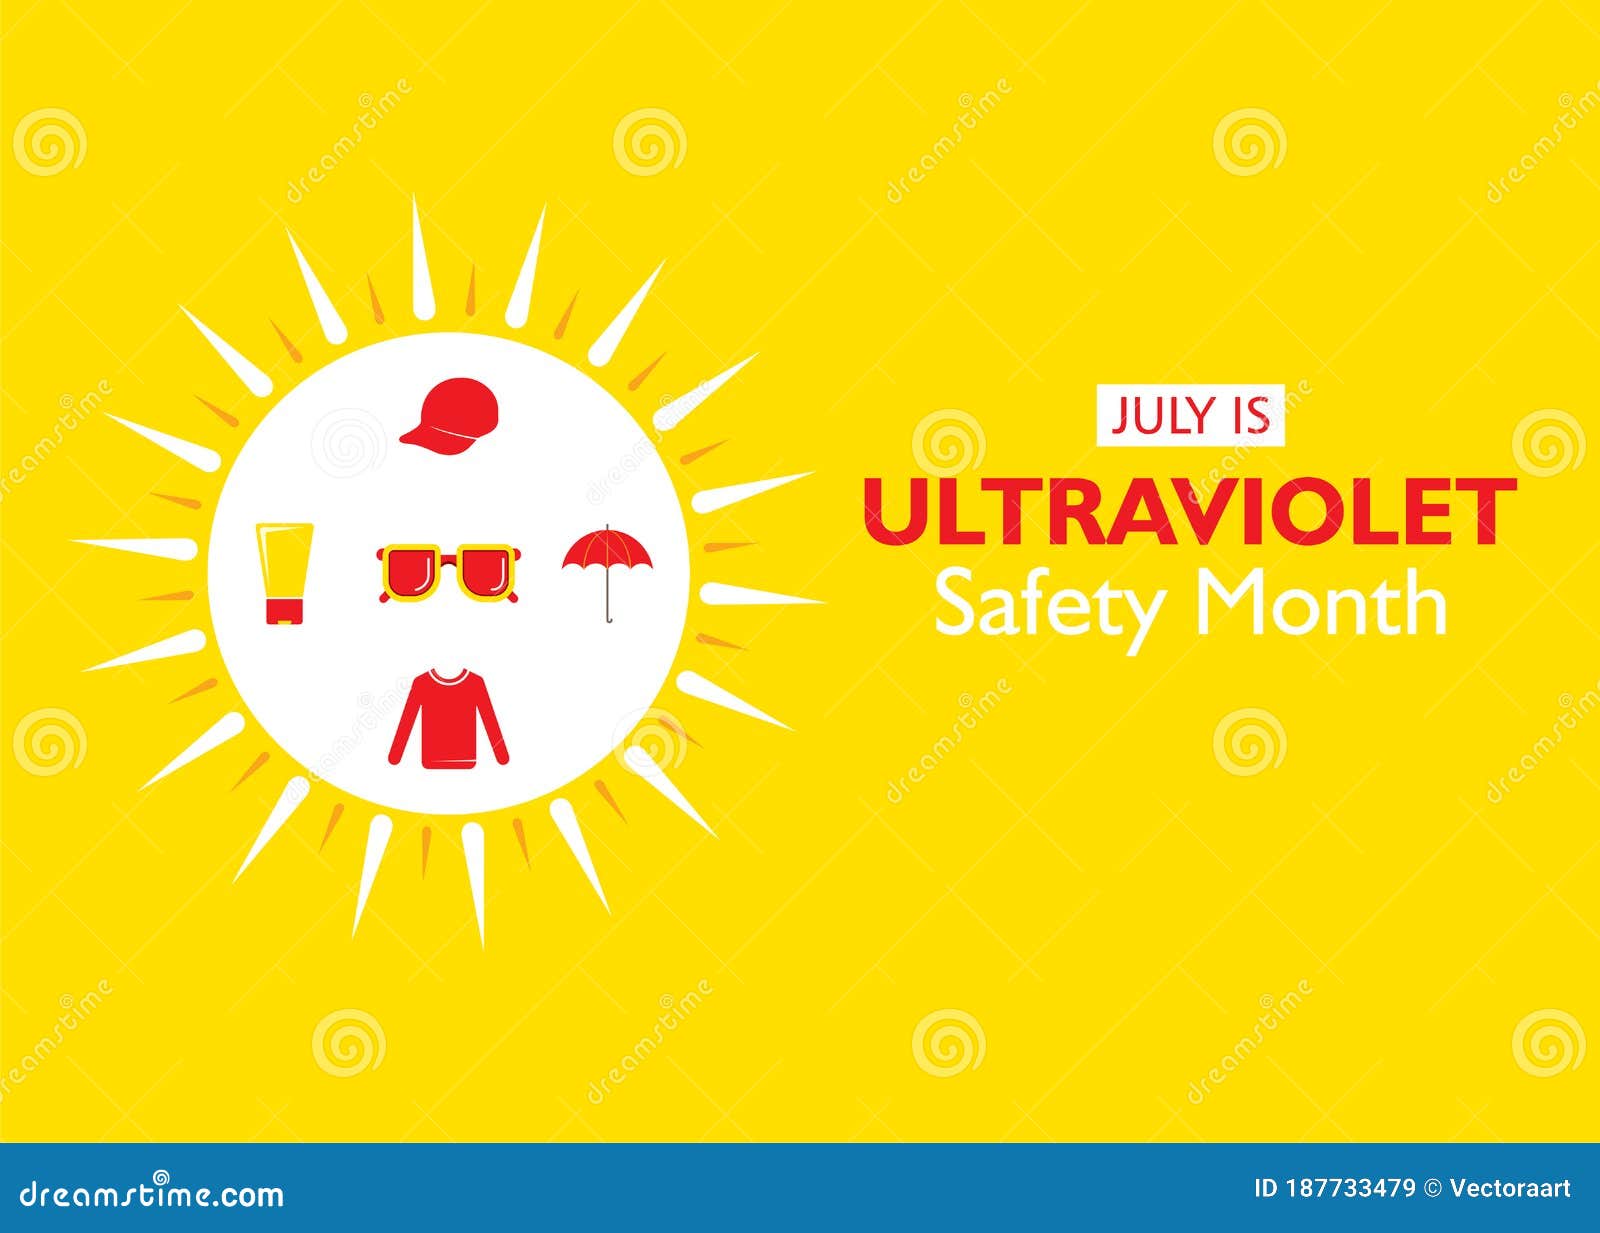 Ultraviolet Safety Awareness Month Cartoon Vector | CartoonDealer.com ...